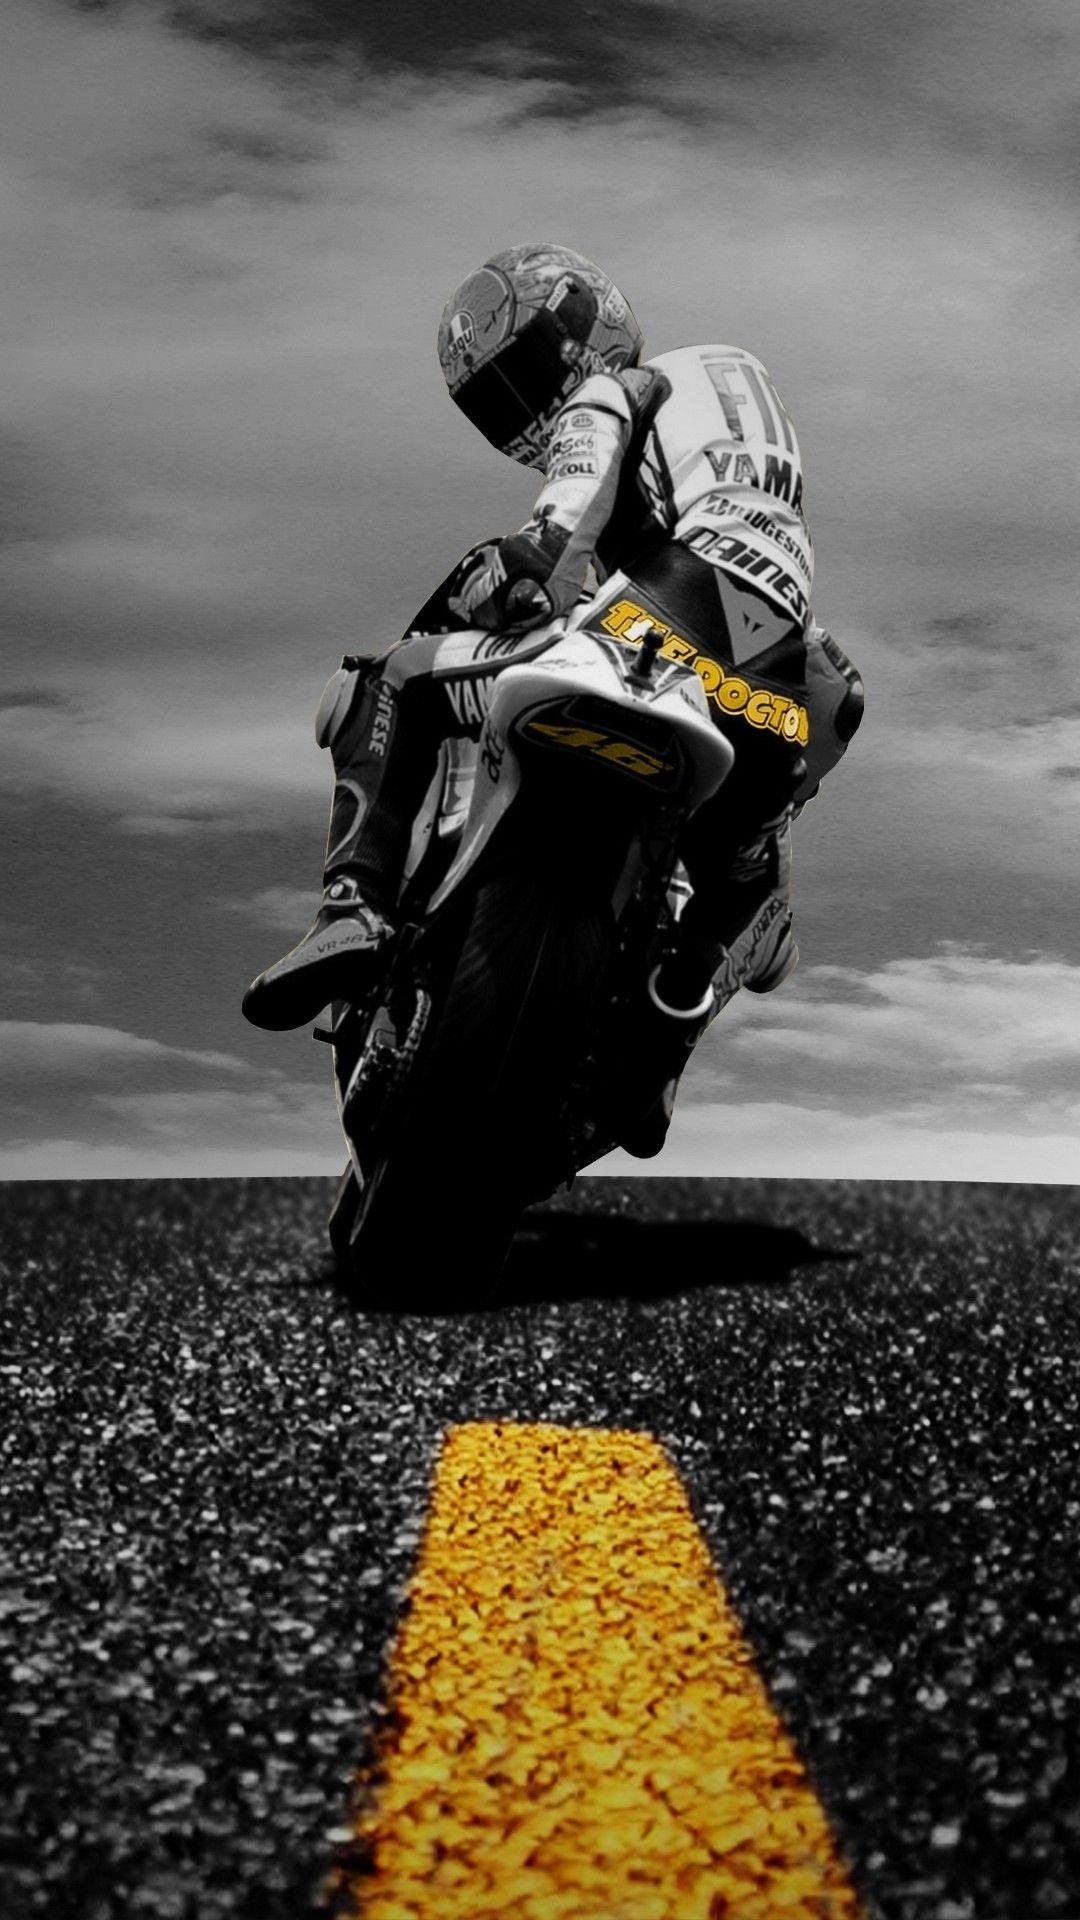 Motorcycle iPhone Wallpapers - Top Free Motorcycle iPhone ...